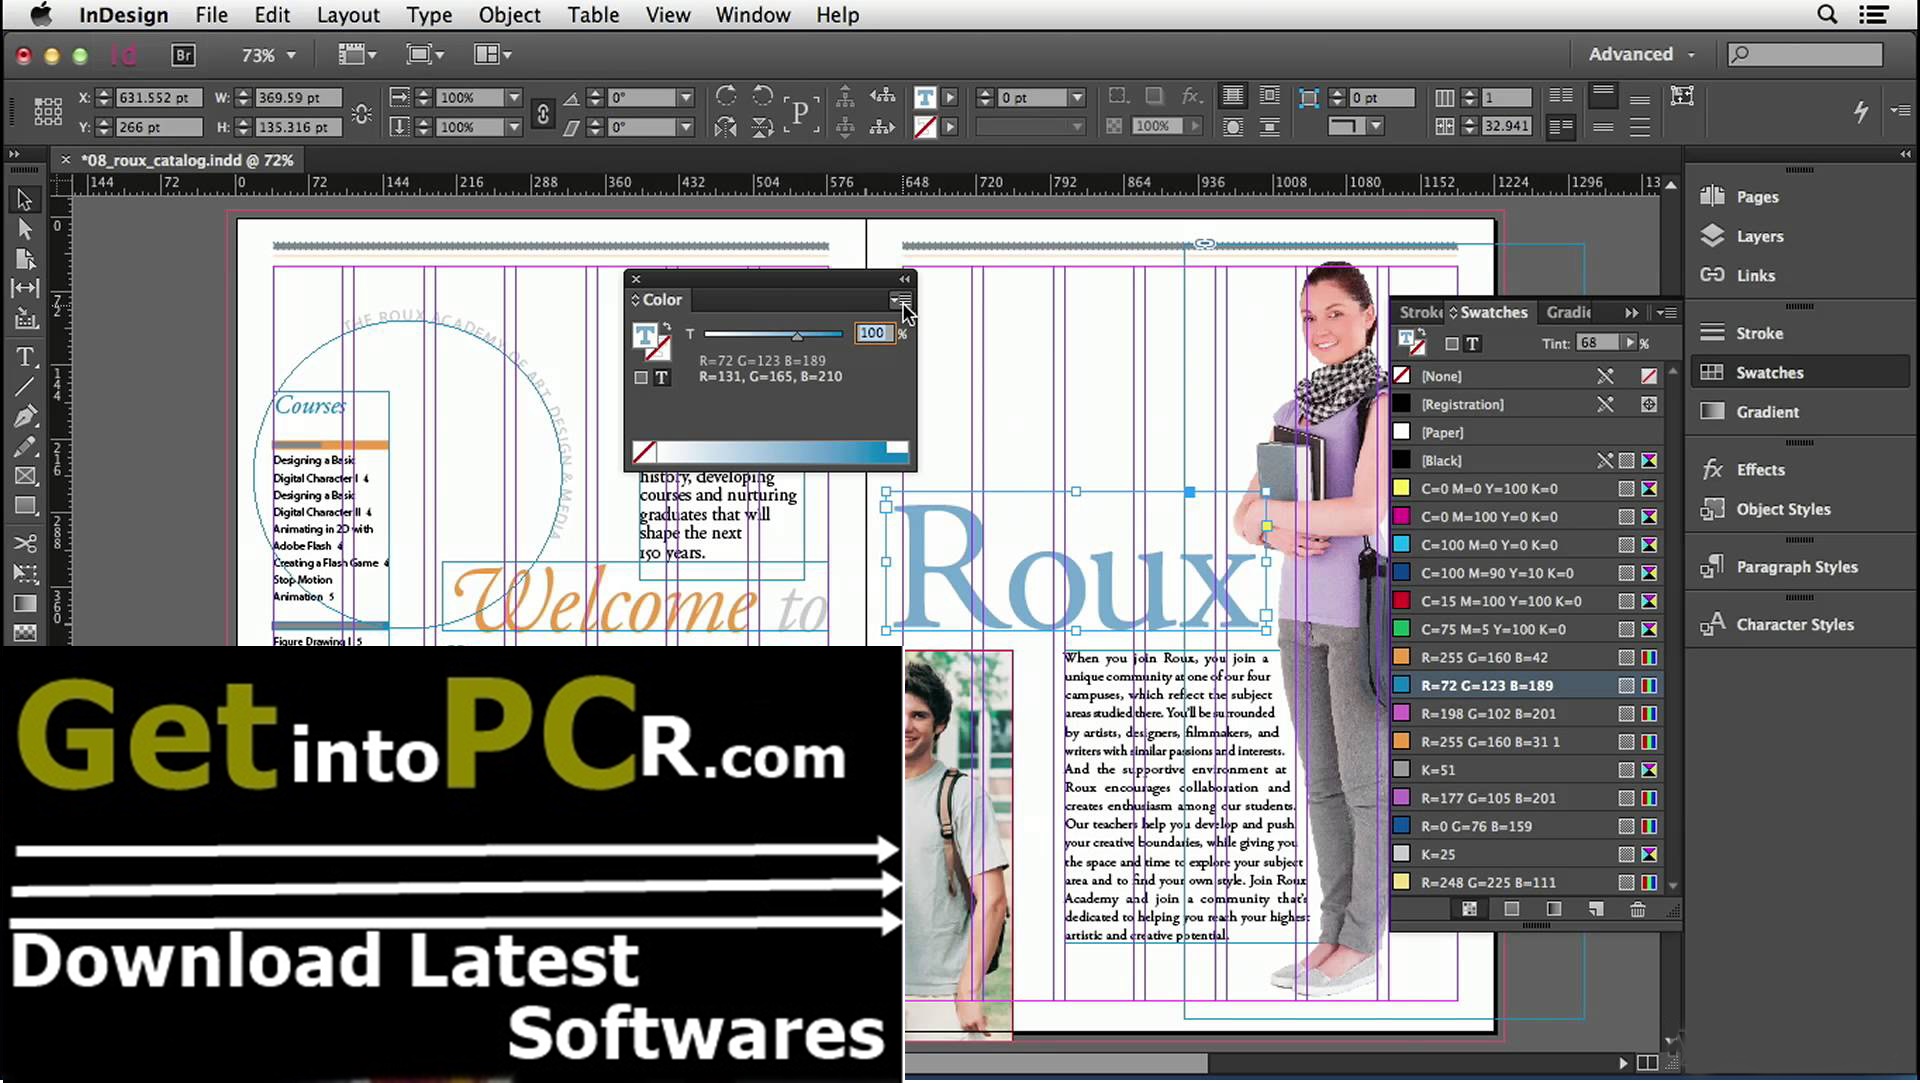 Adobe InDesign CC 2014 Latest Version Download